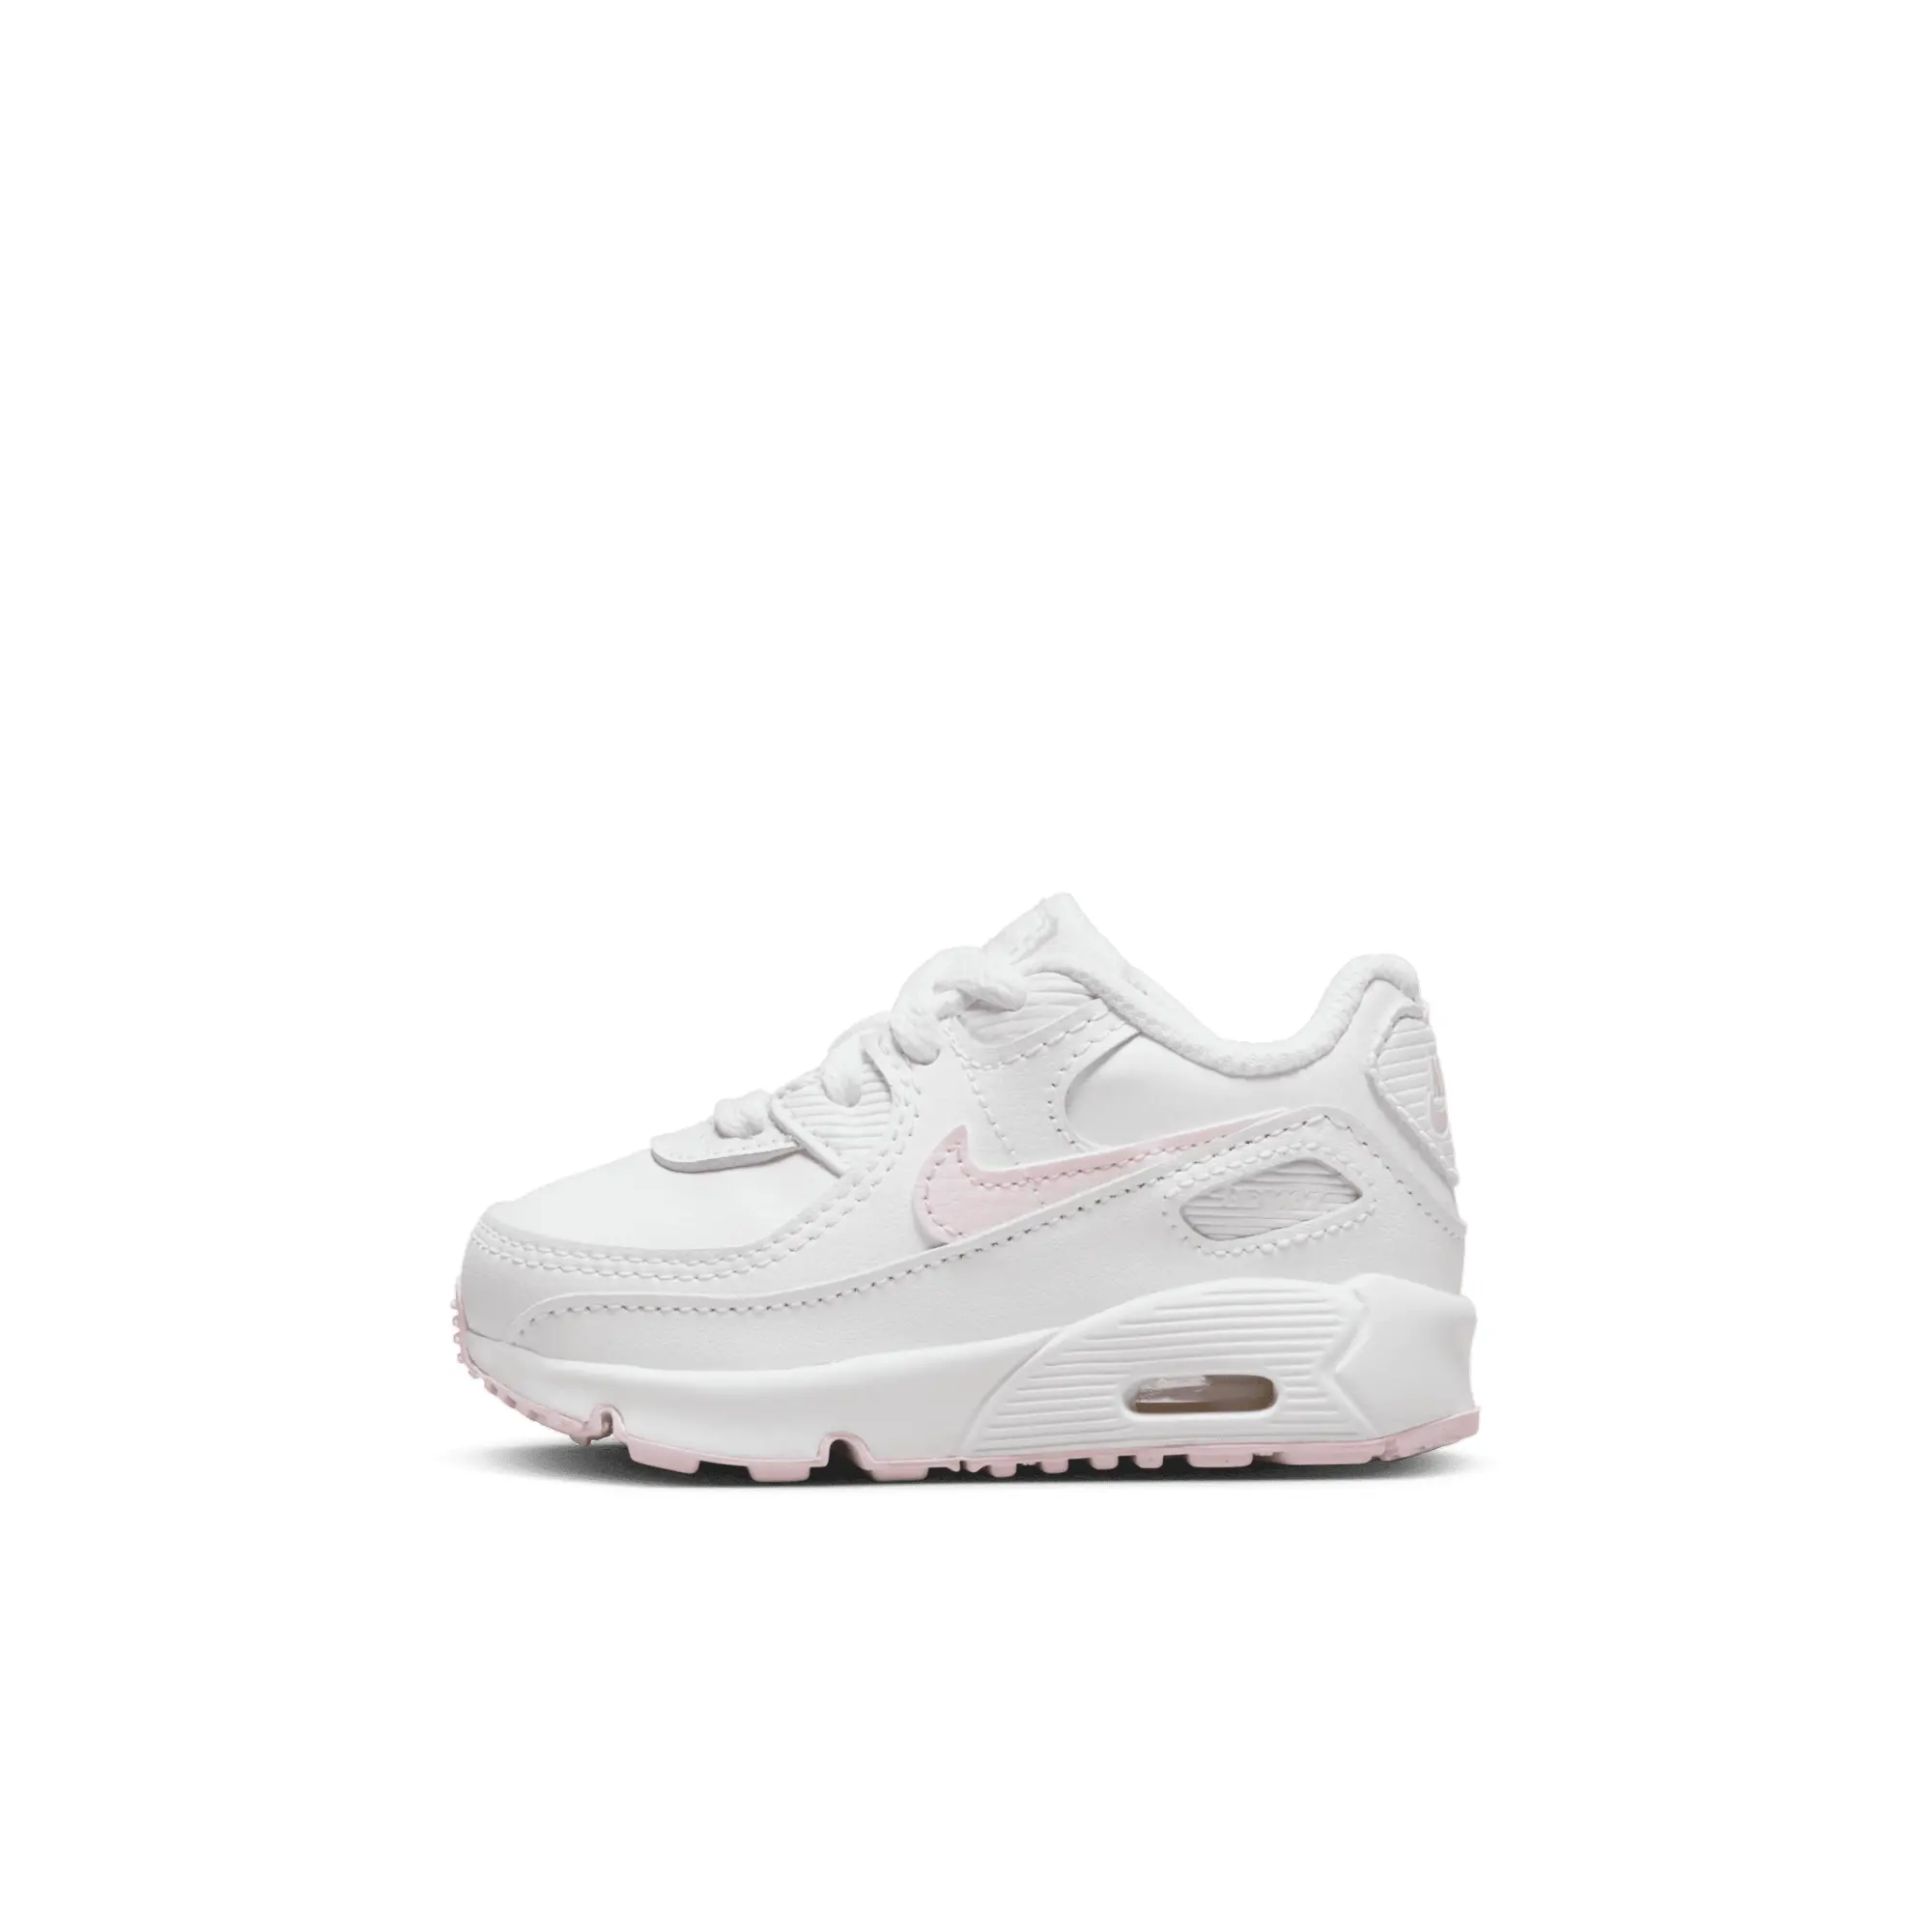 Nike Nursery Air Max 90 Leather Trainer - White / Pink Foam / White